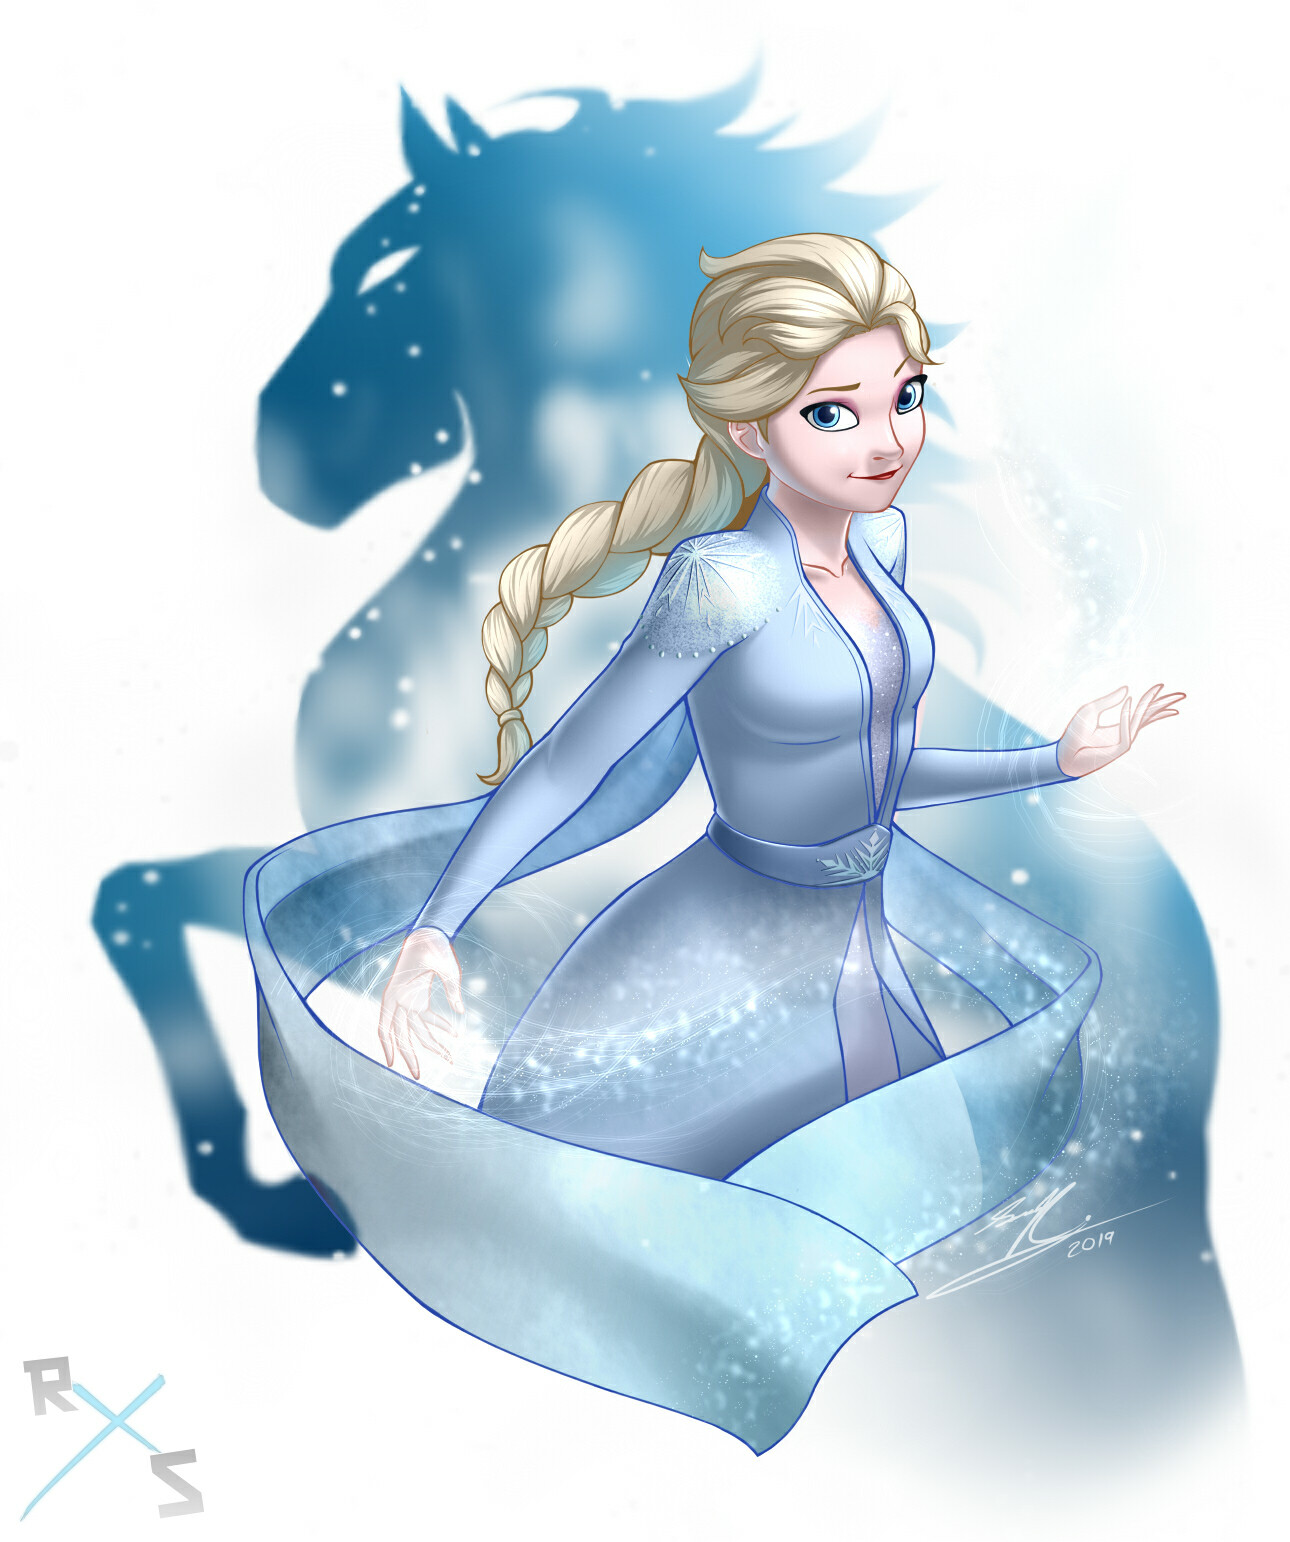 Fan art of Elsa after watching the new trailer release. 